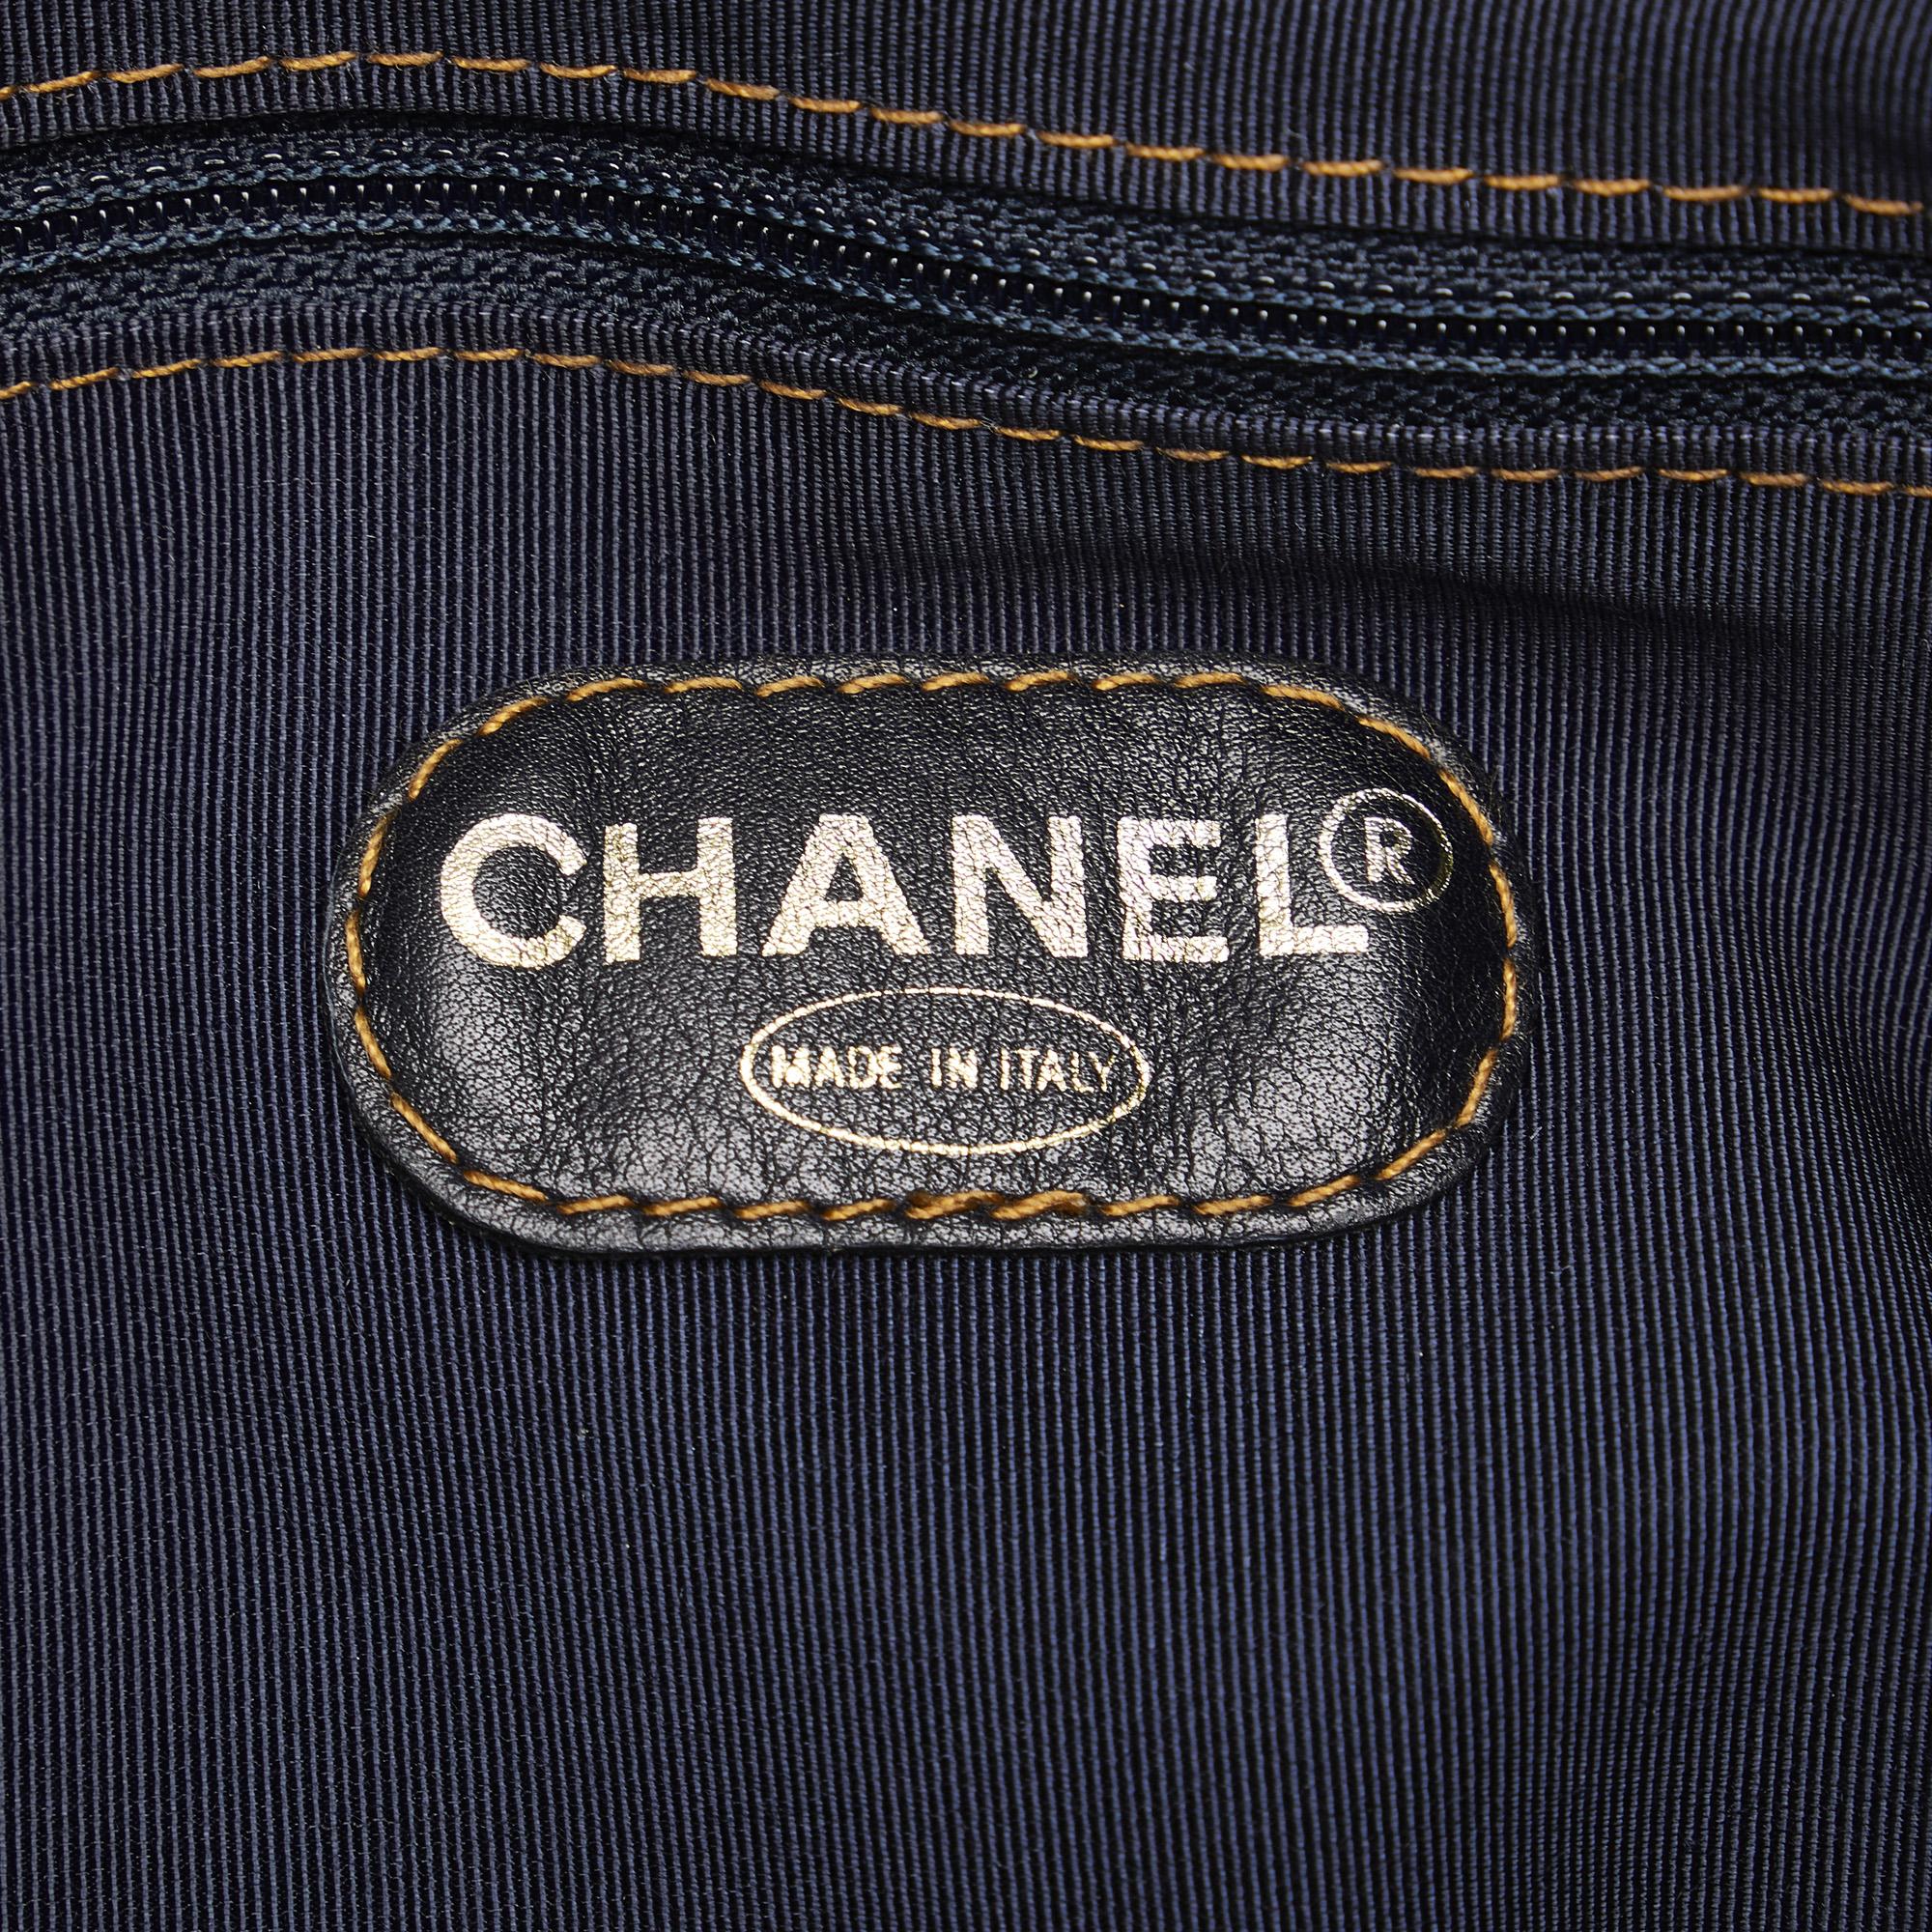 Chanel Blue CC Denim Tote Bag